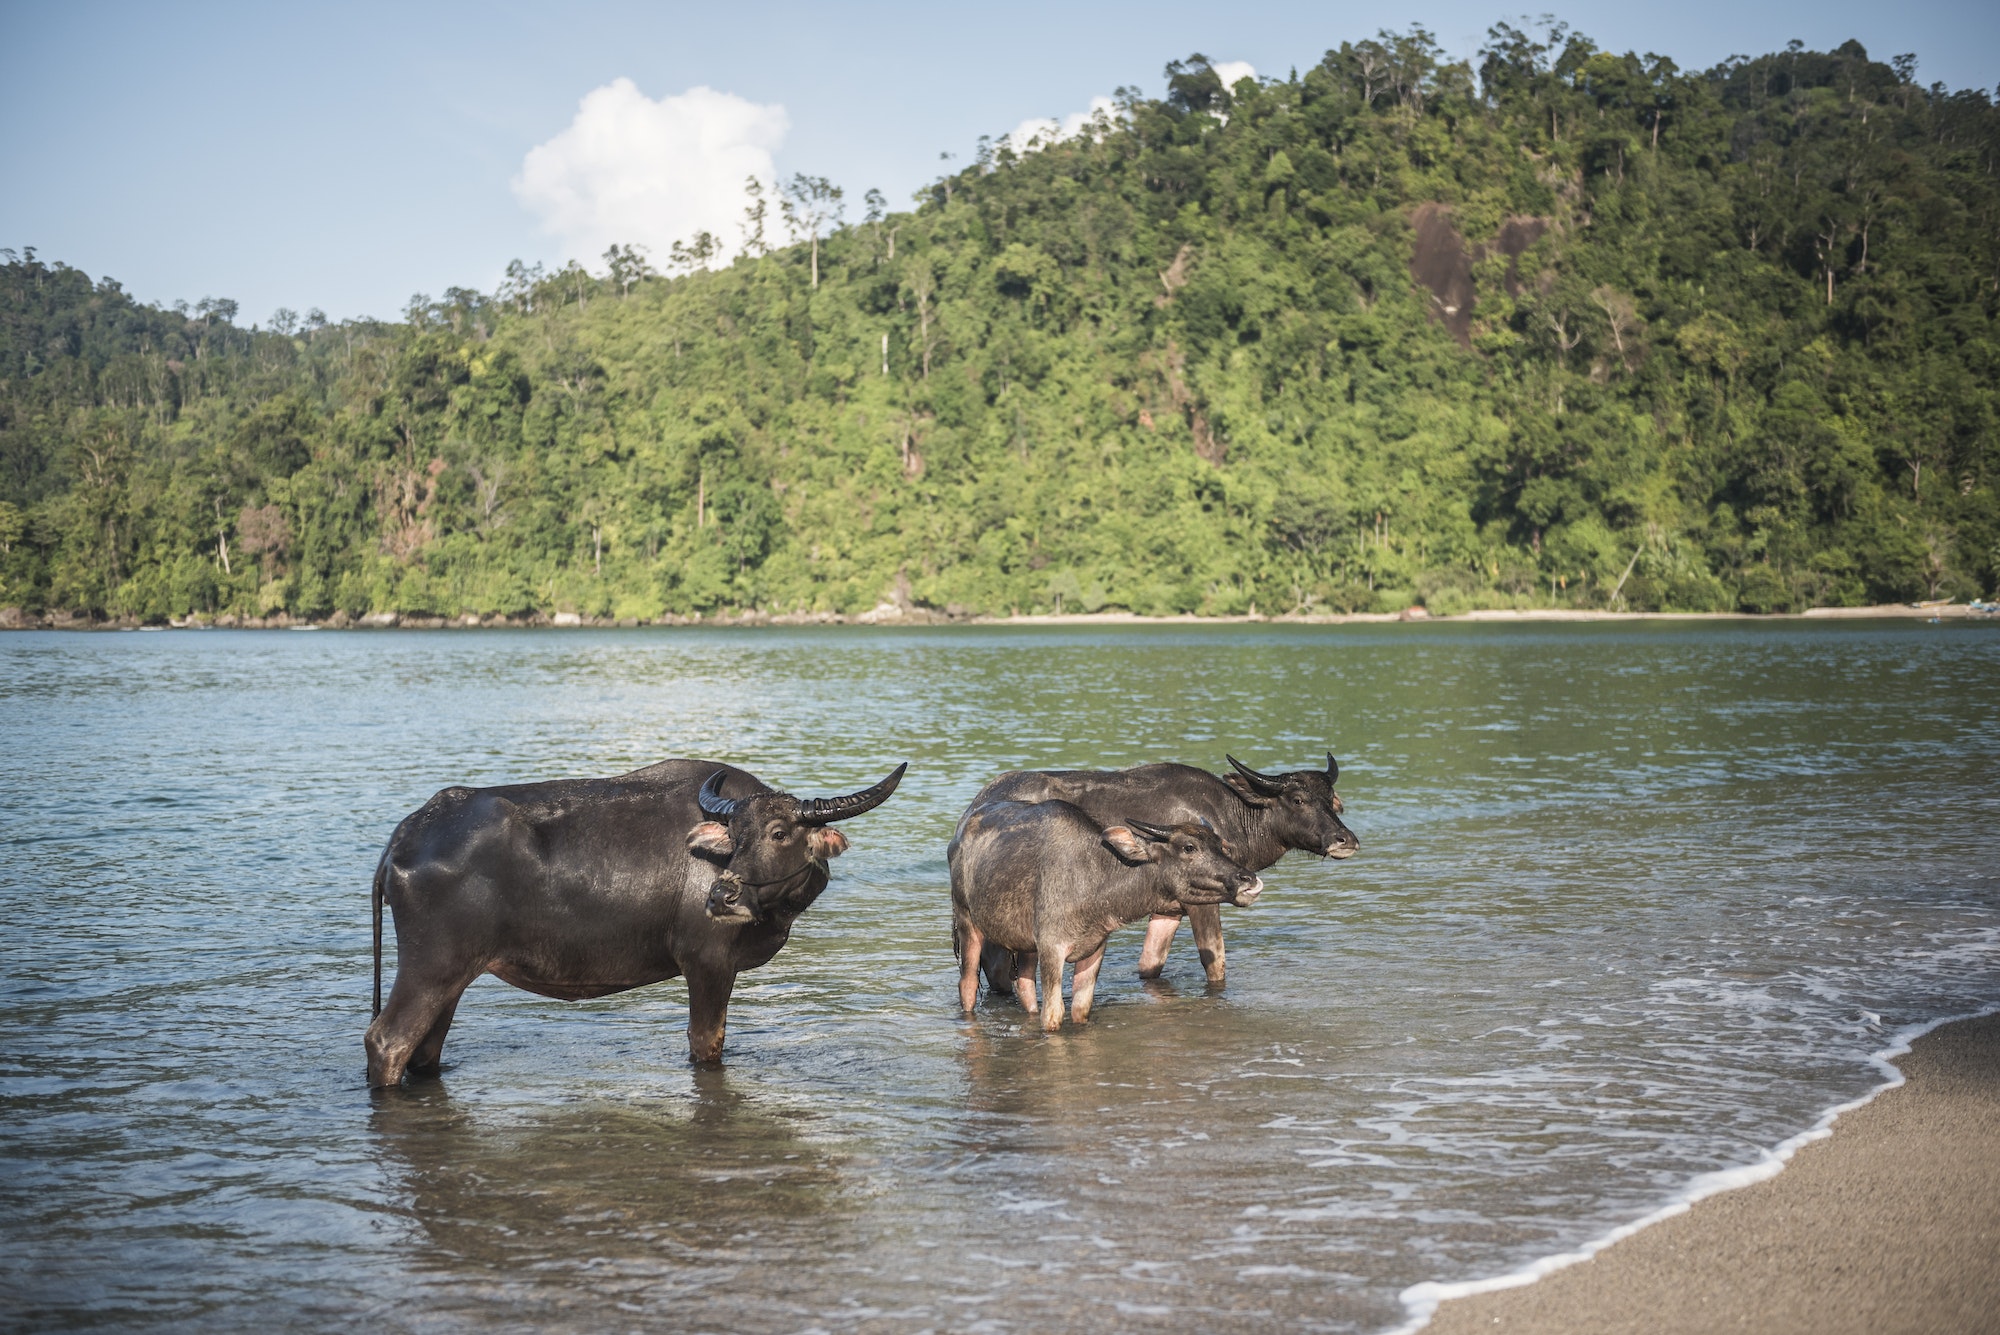 Water Buffalo on the beach at Sungai Pinang, near Padang in West Sumatra, Indonesia, Asia